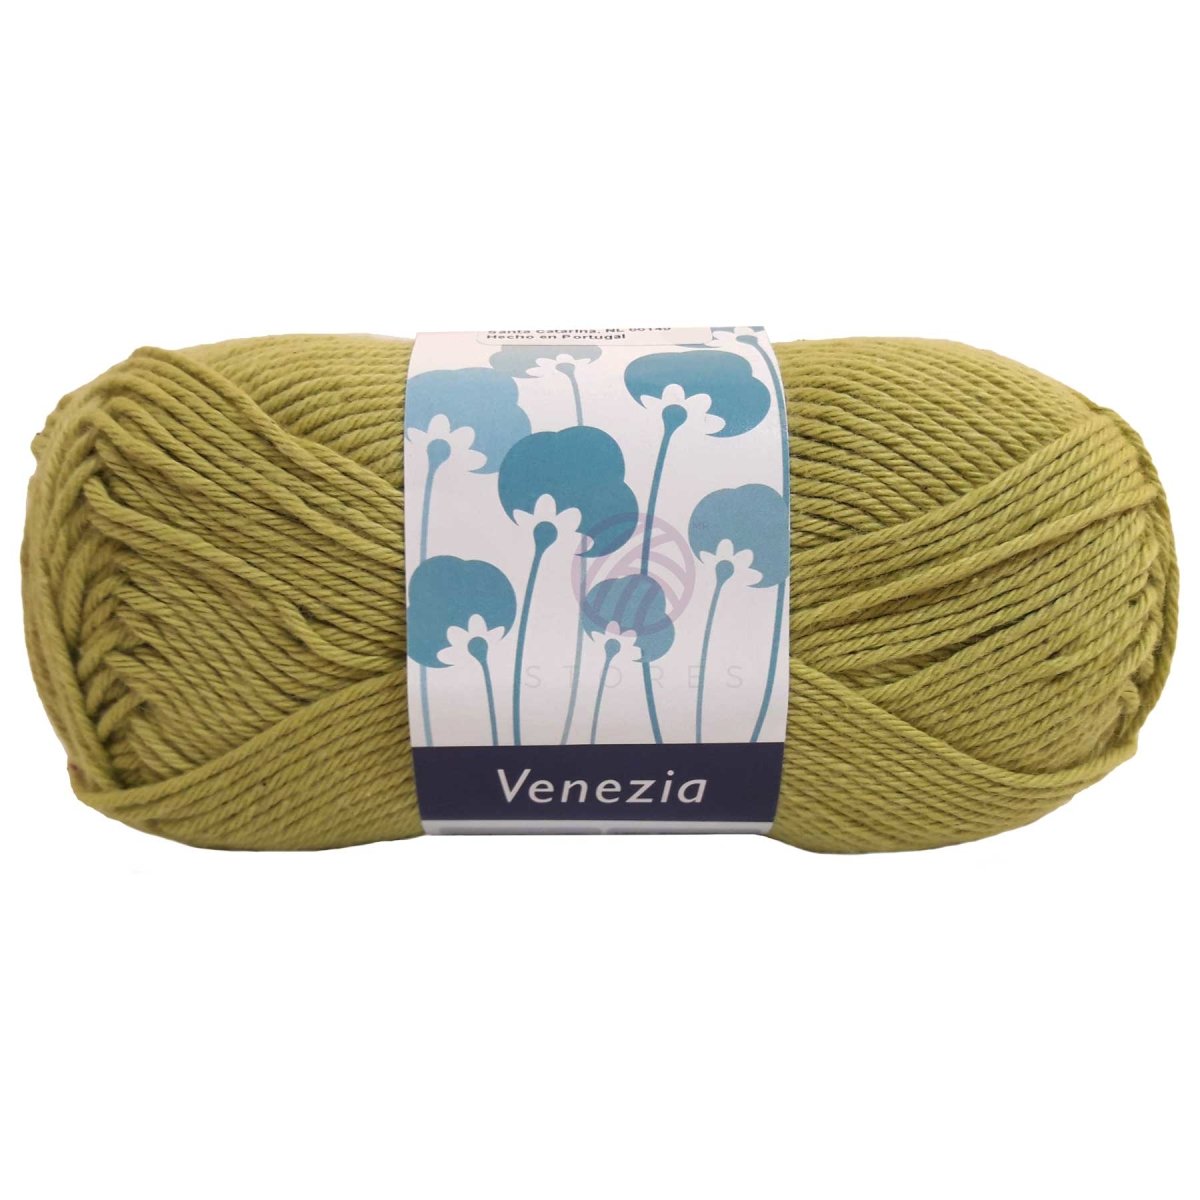 VENEZIA - Crochetstores204-245606850204244